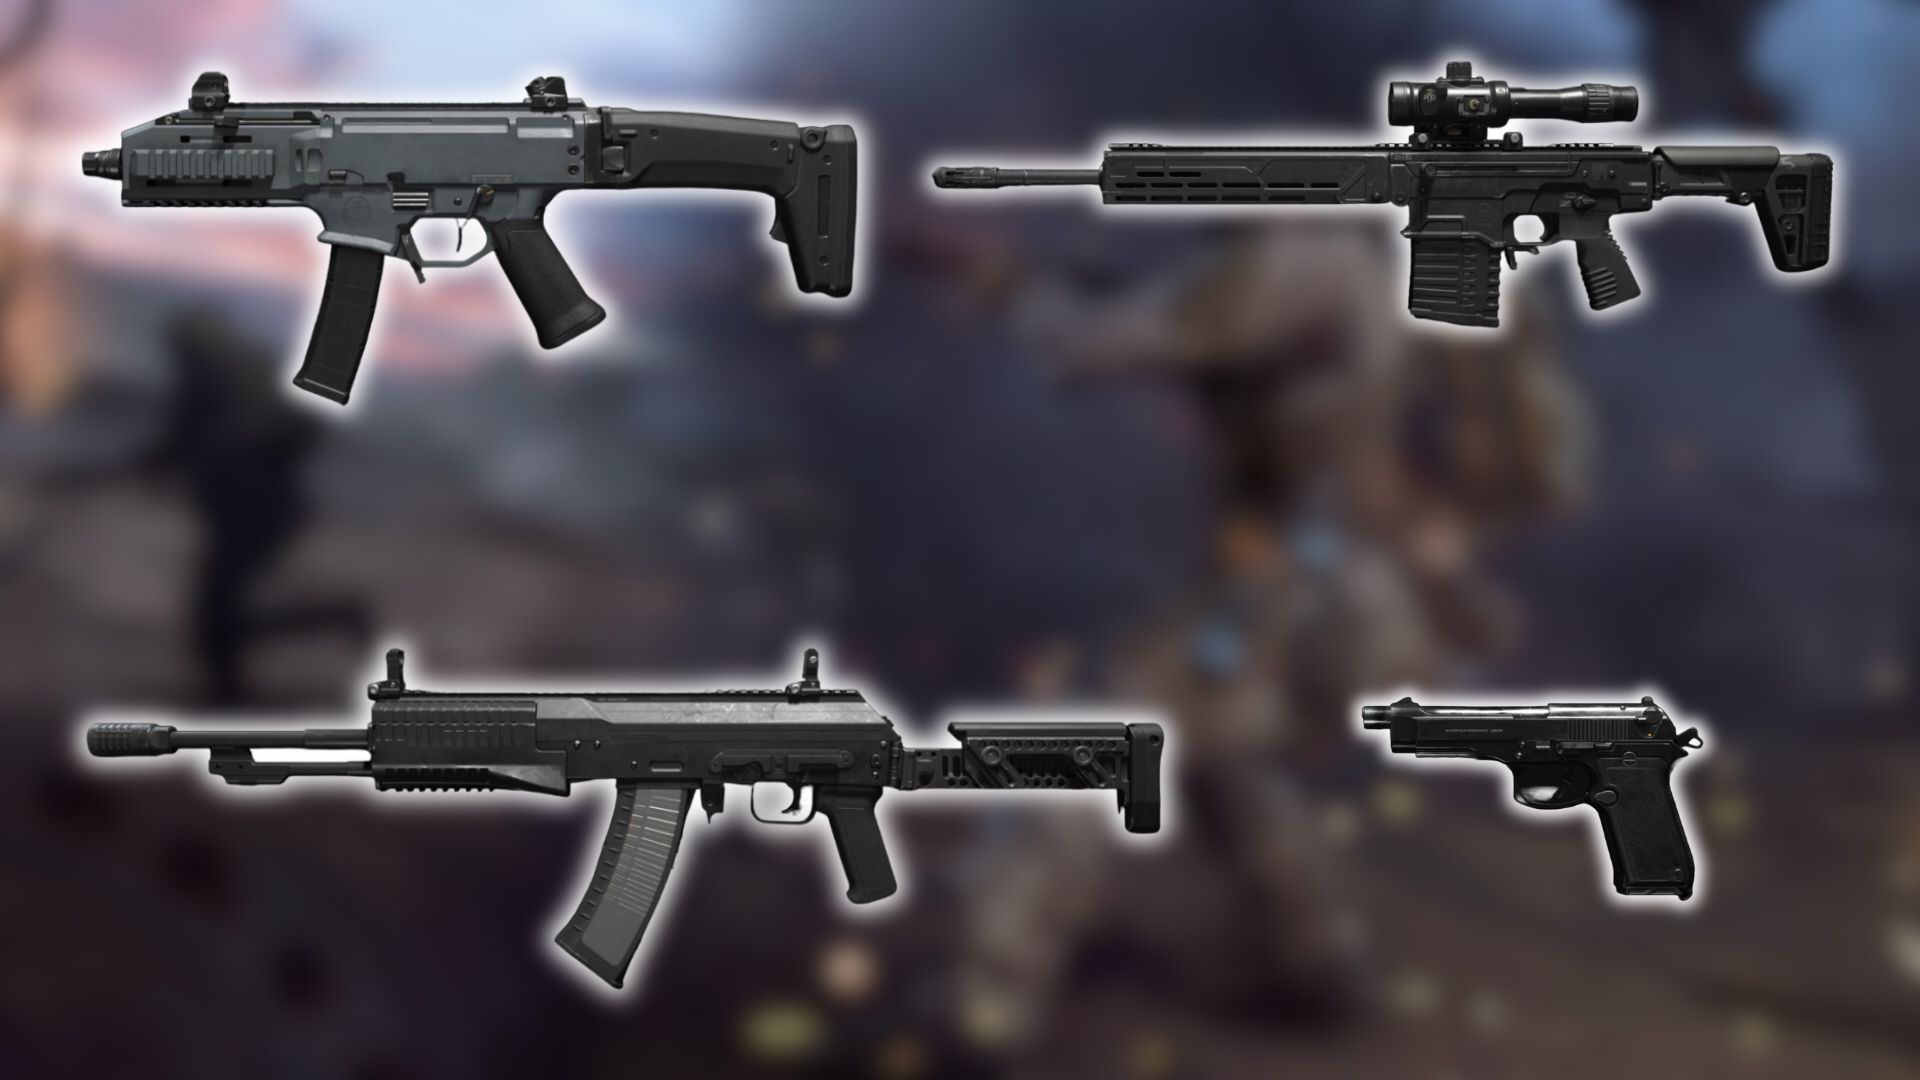 Best MW3 guns – the meta weapons for Season 1